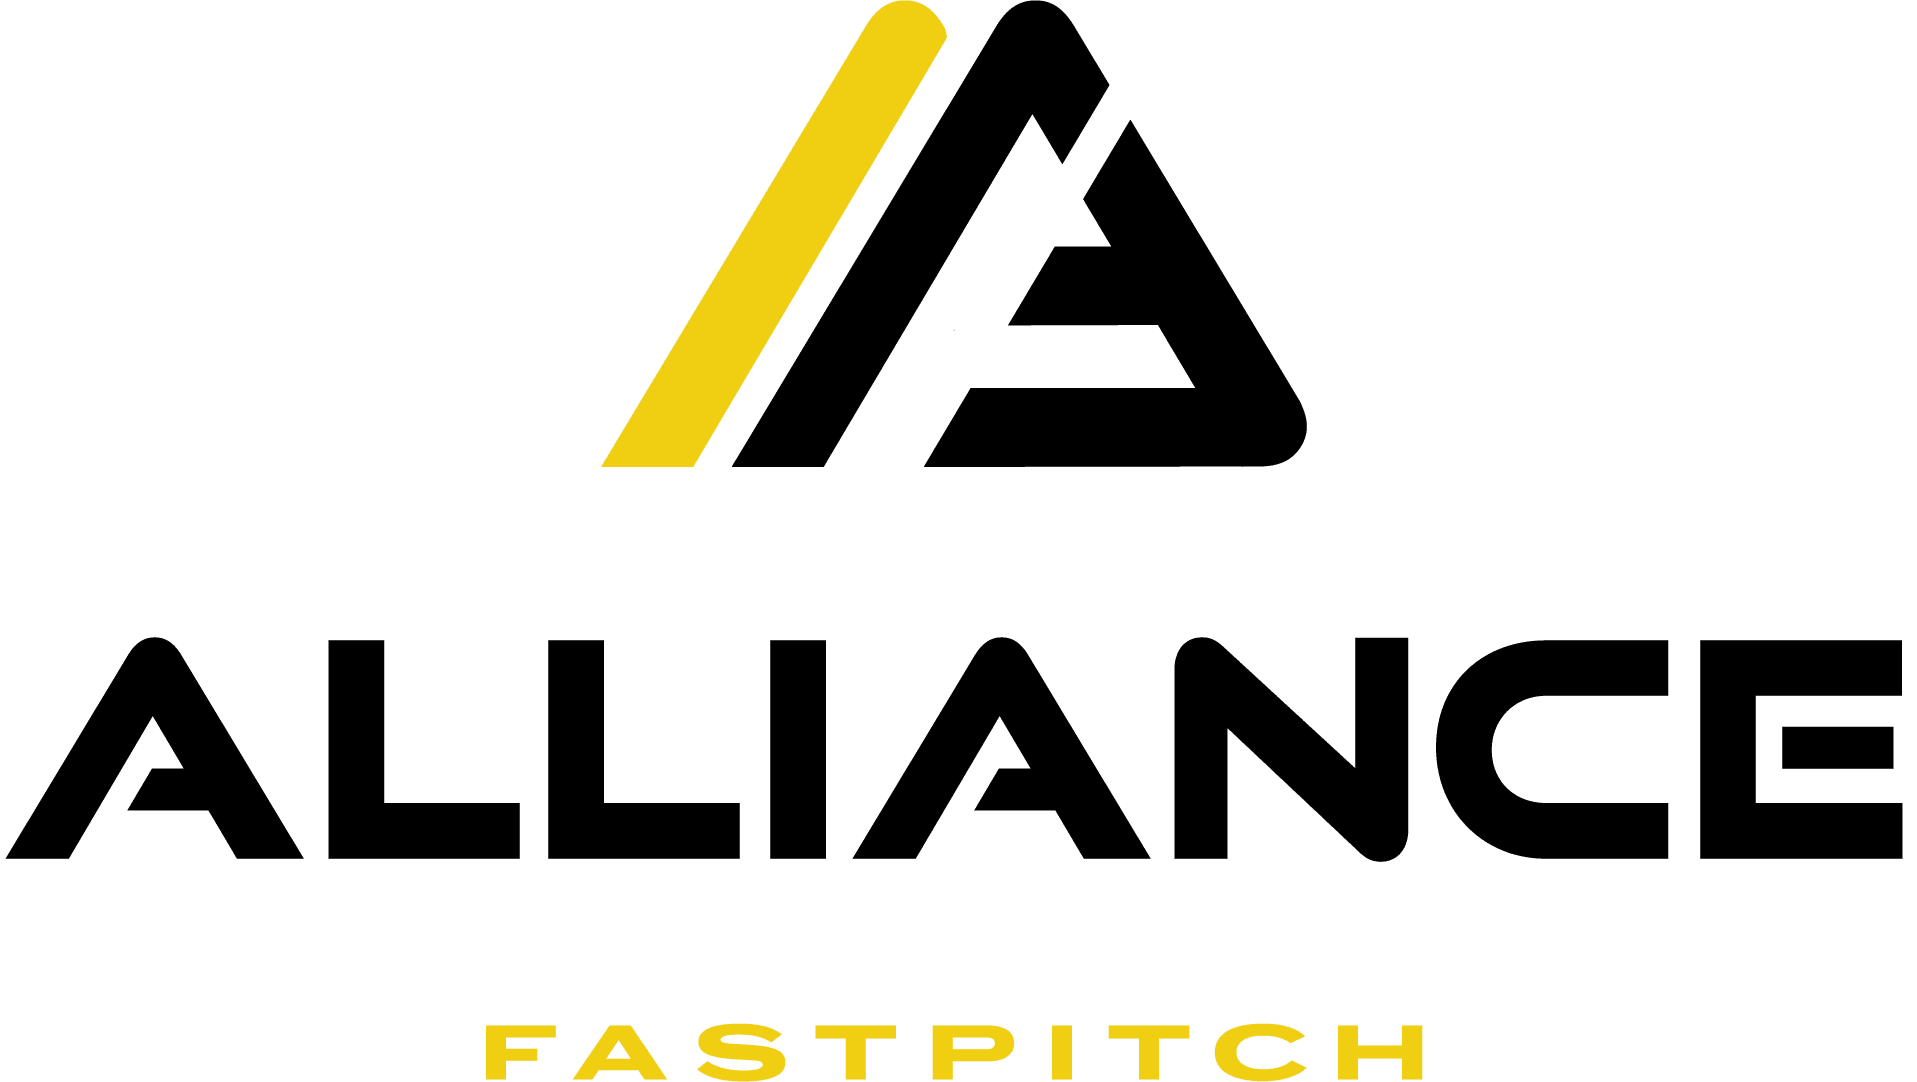 Alliance logotype Bk7405c 1